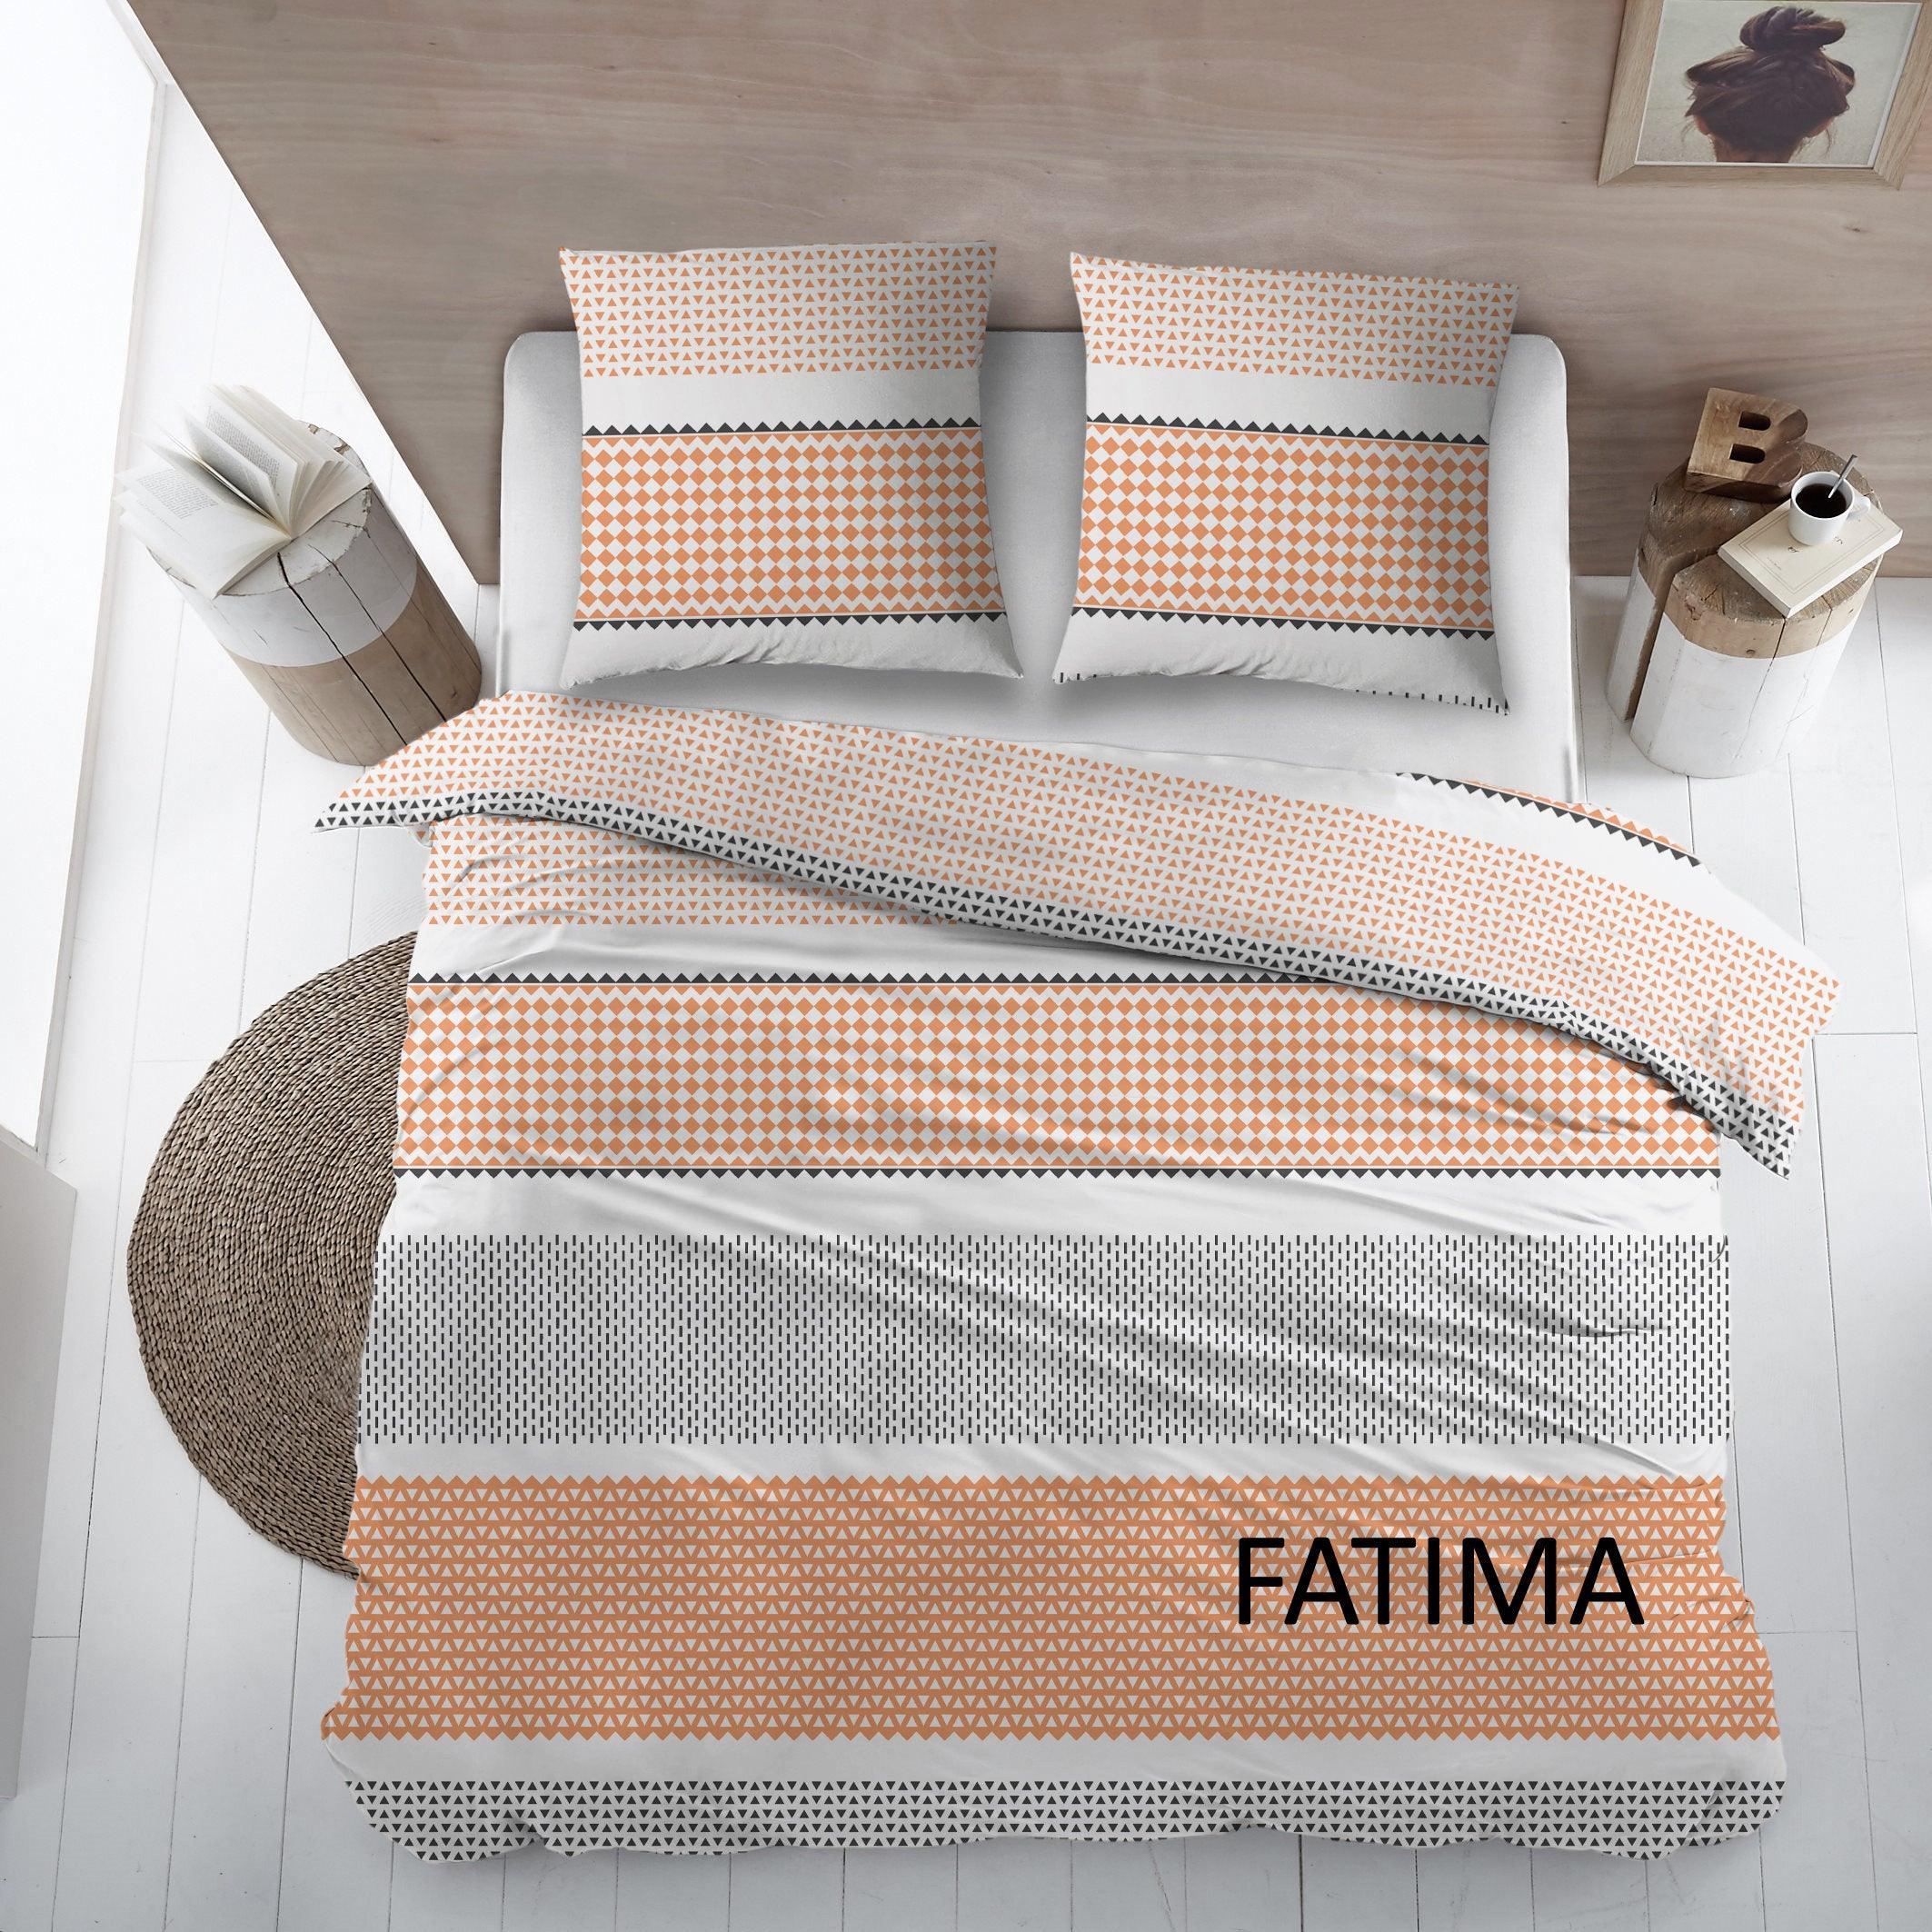 Baumwolle Bettbezug Fatima Flanell